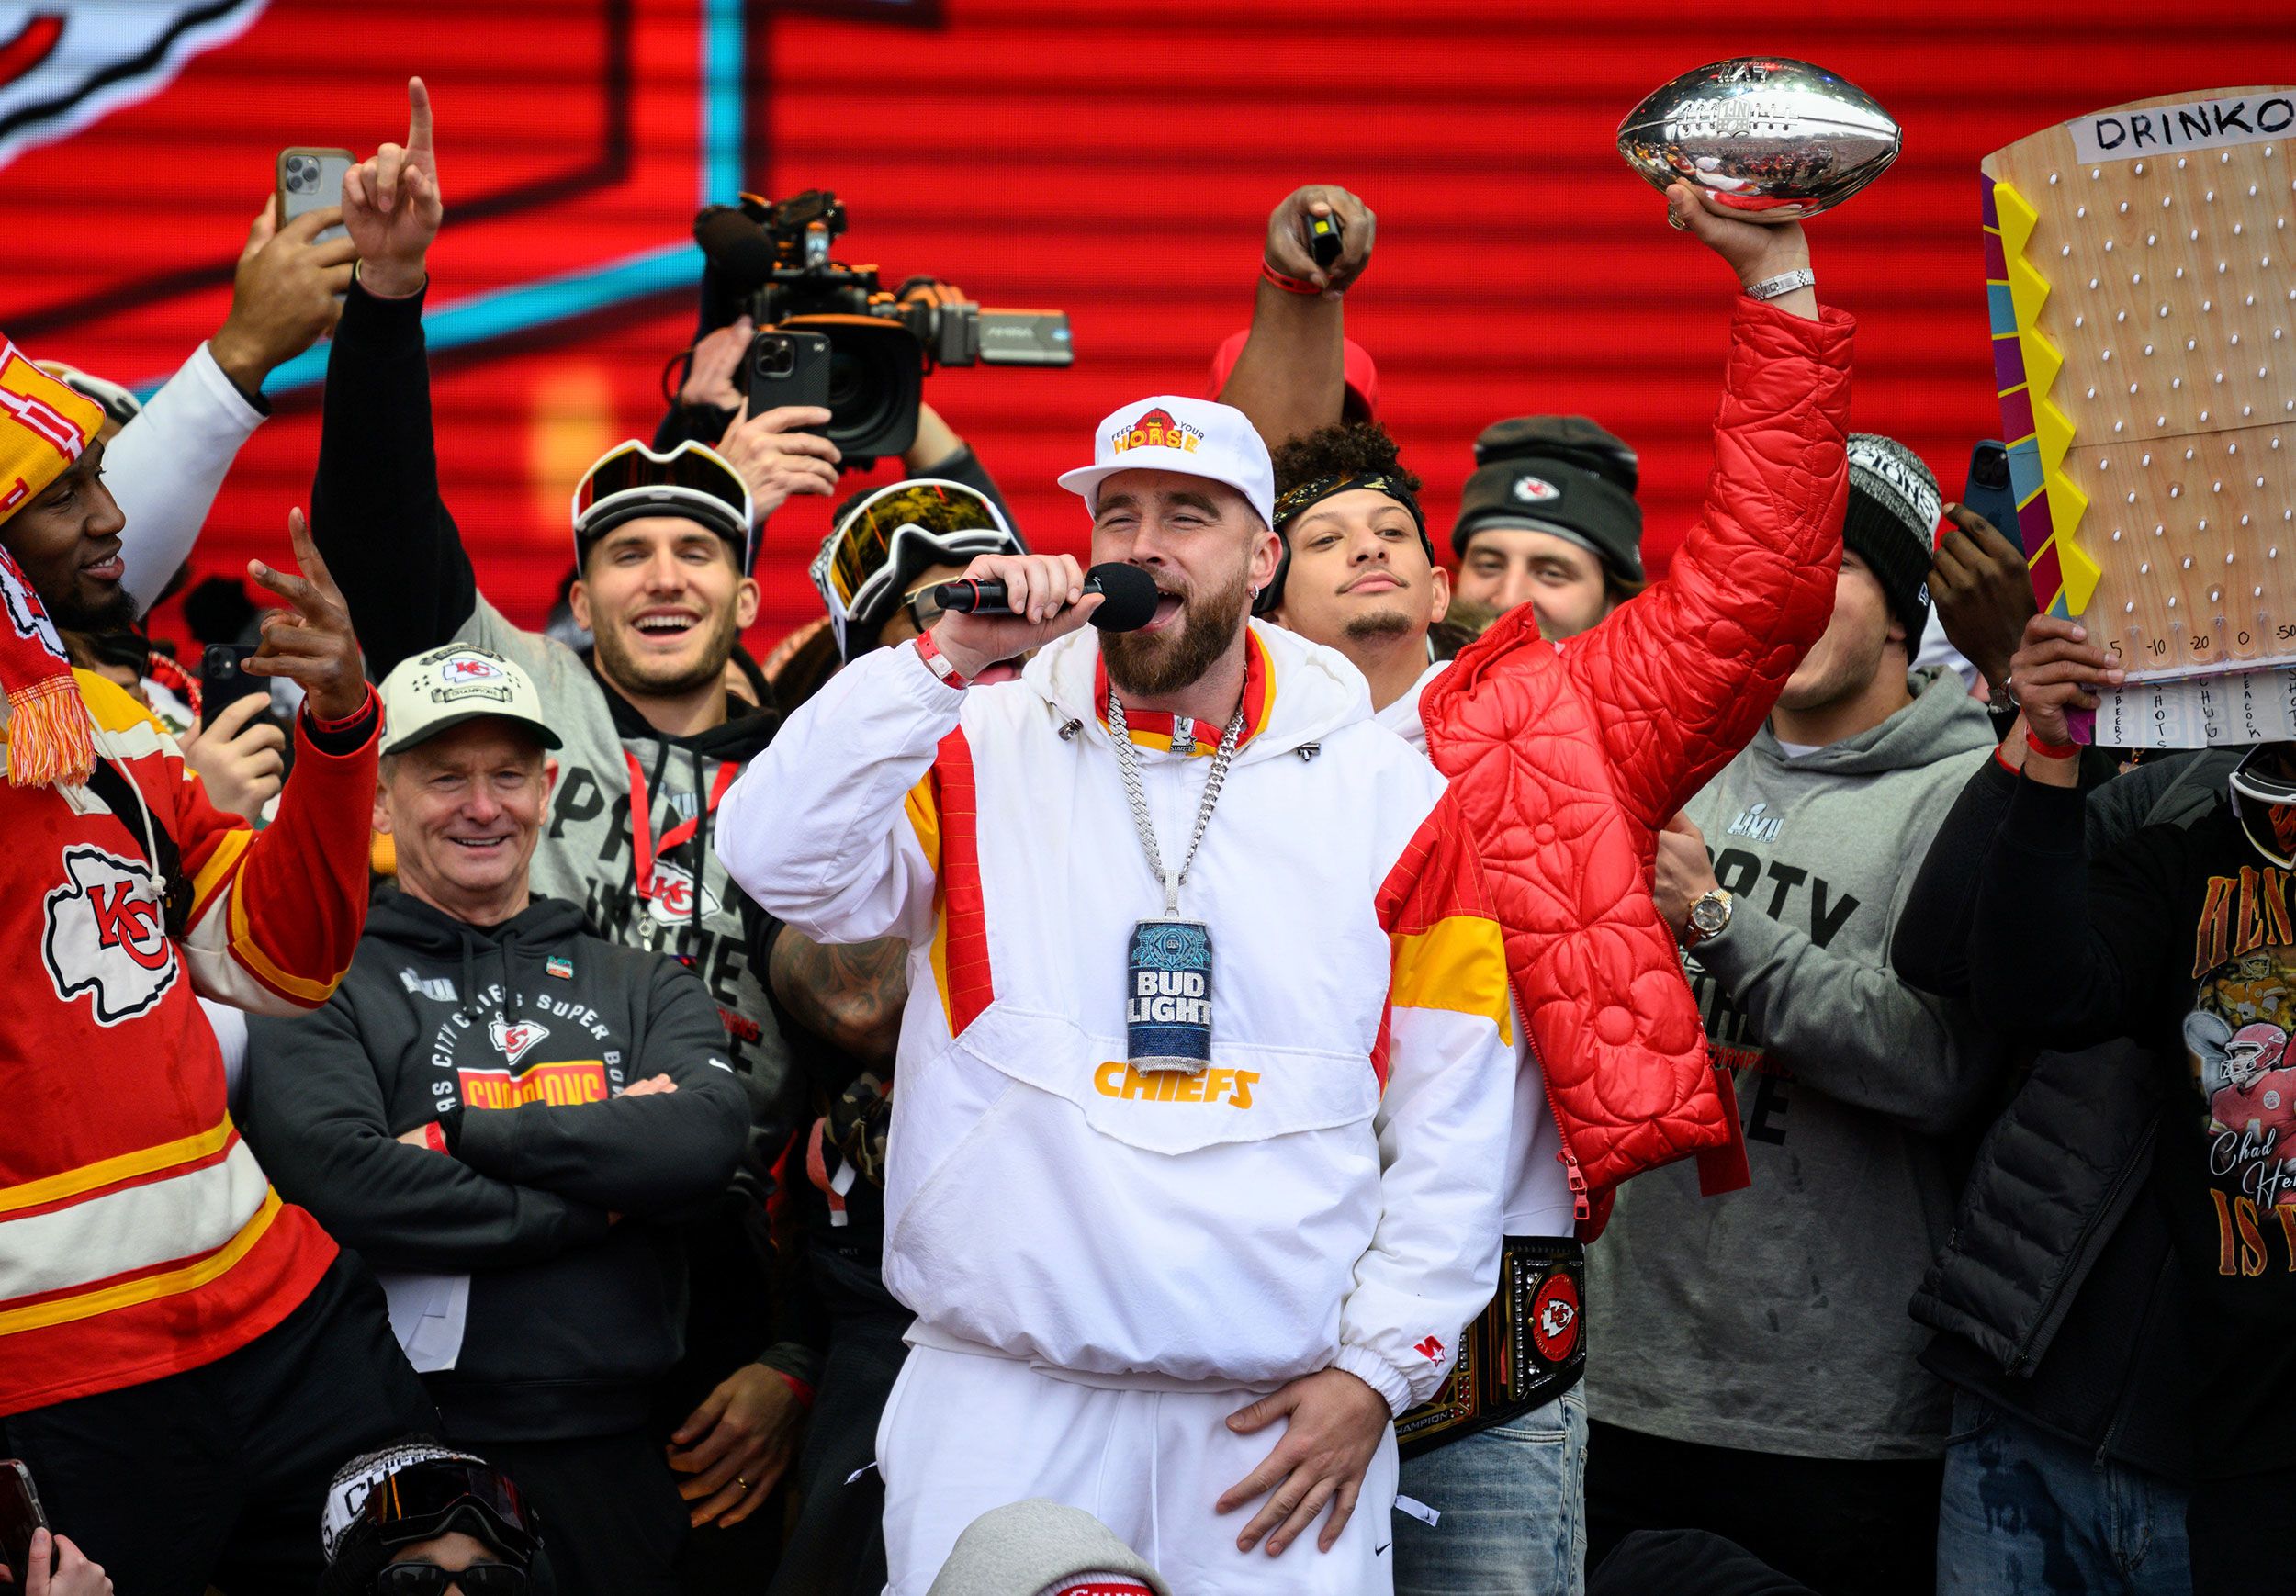 Kansas City Chiefs parade and rally: Super Bowl champions continue